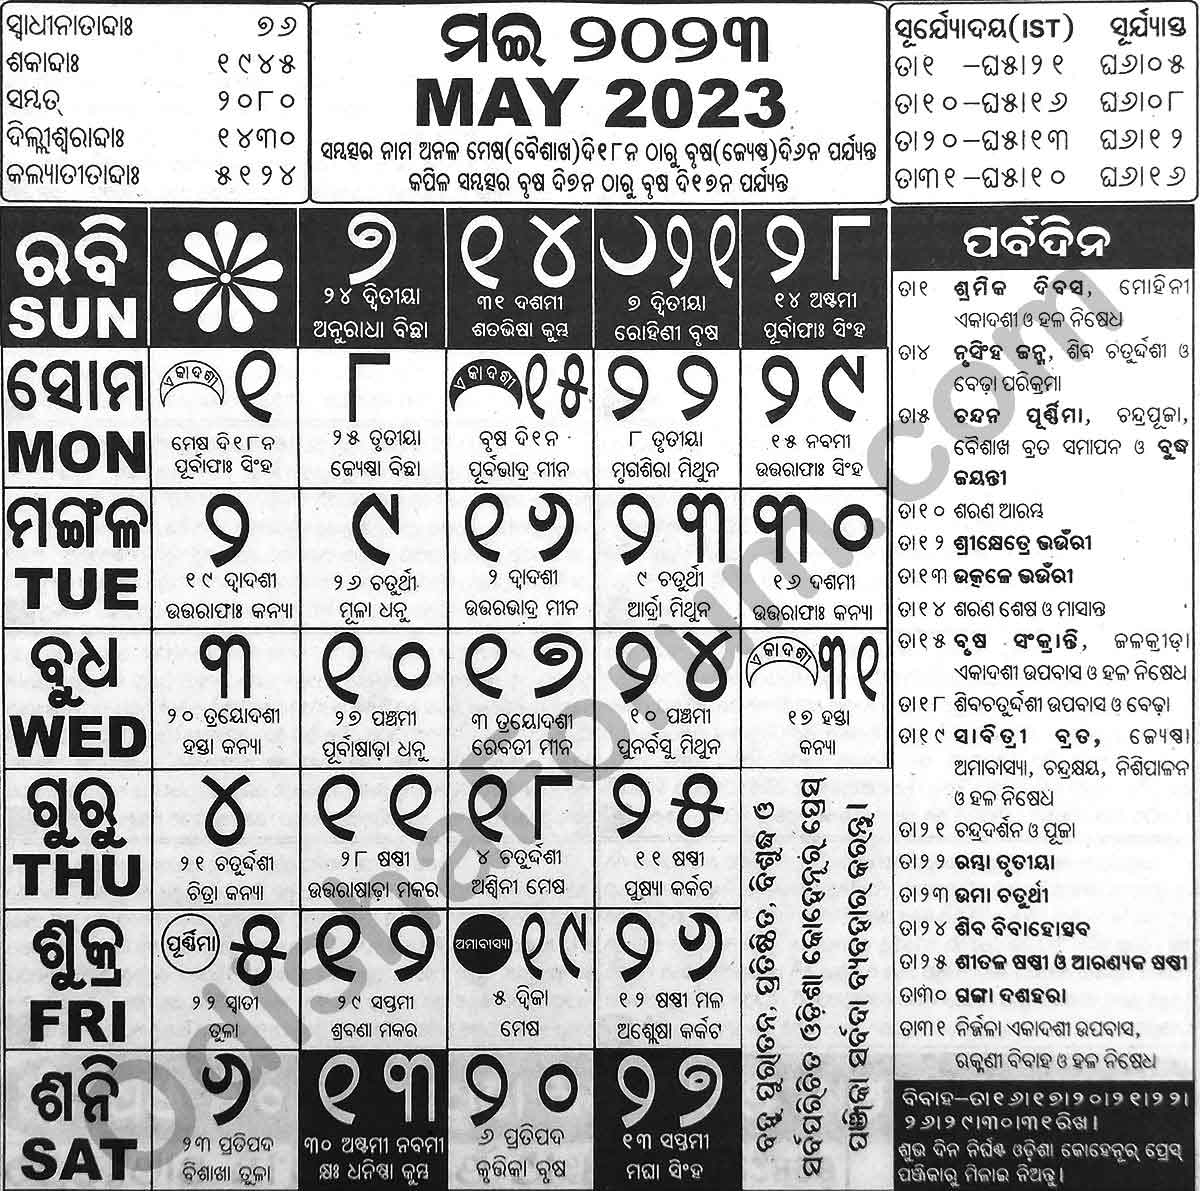 Odia Calendar 2023 May